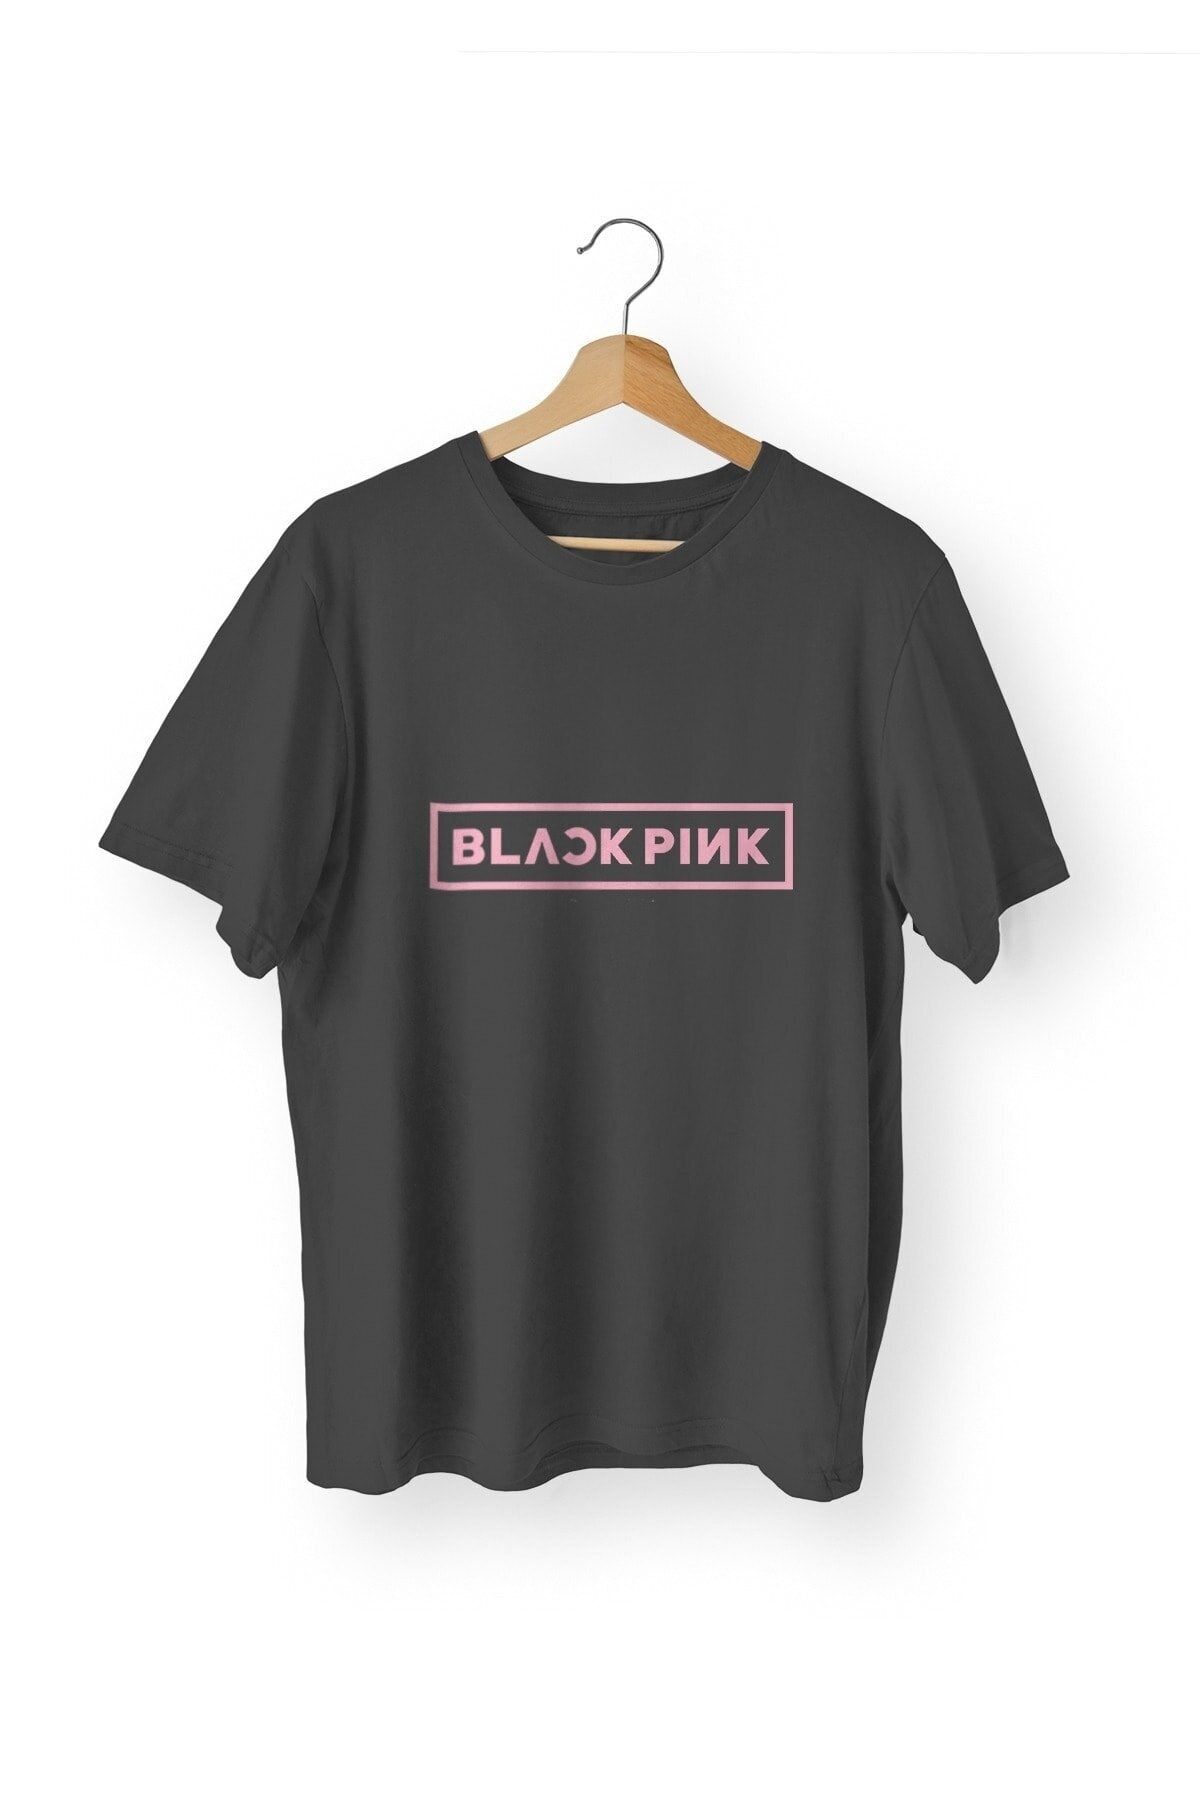 MODAGEN Unisex Black Pink Baskılı Siyah Oversize T-shirt